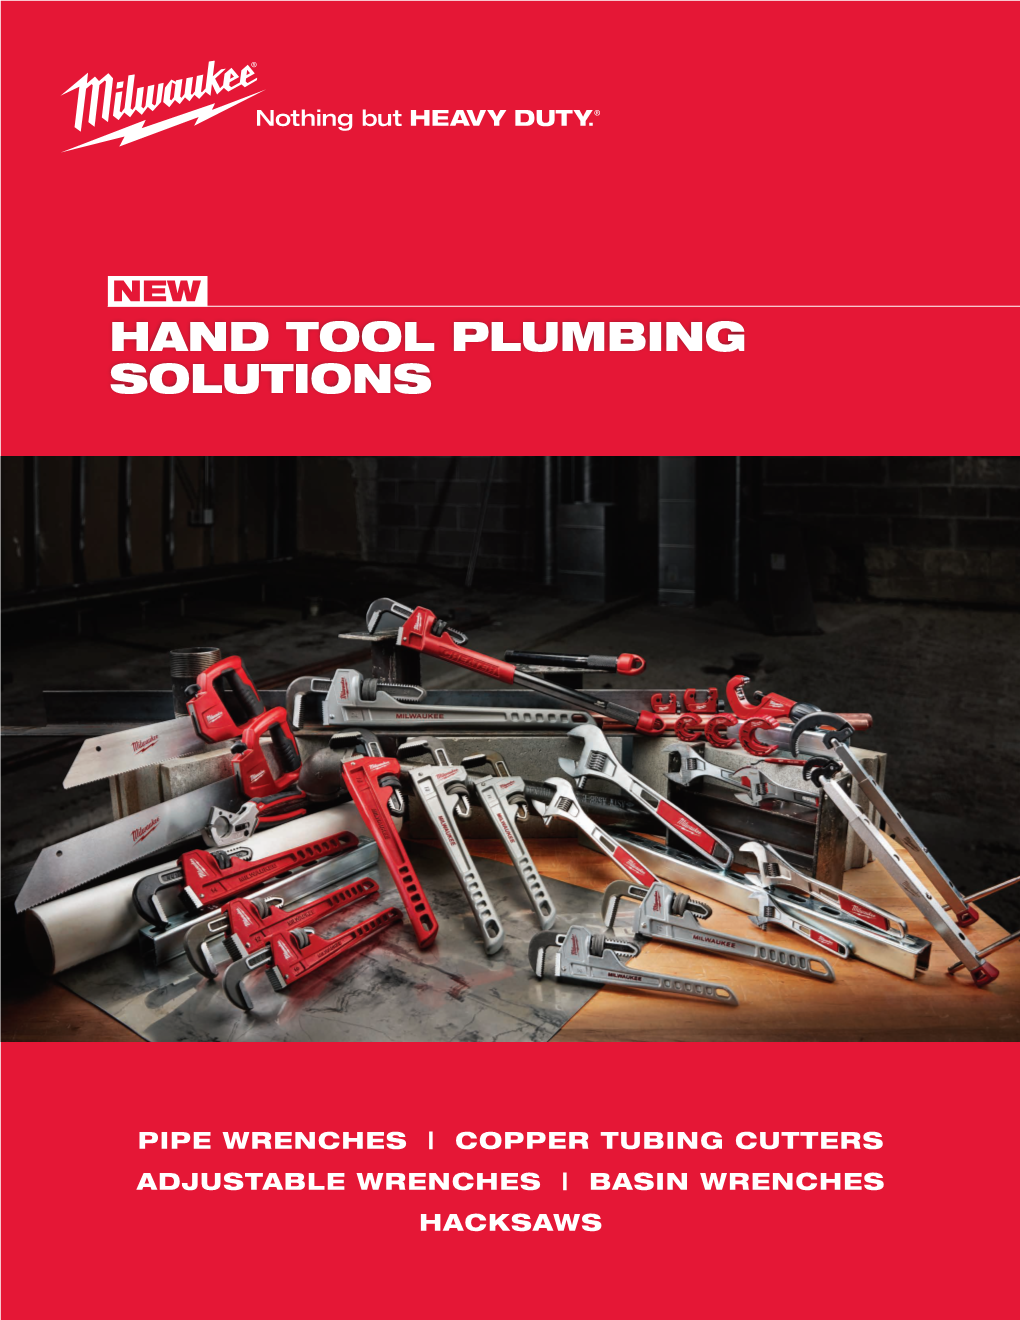 Hand Tool Plumbing Solutions